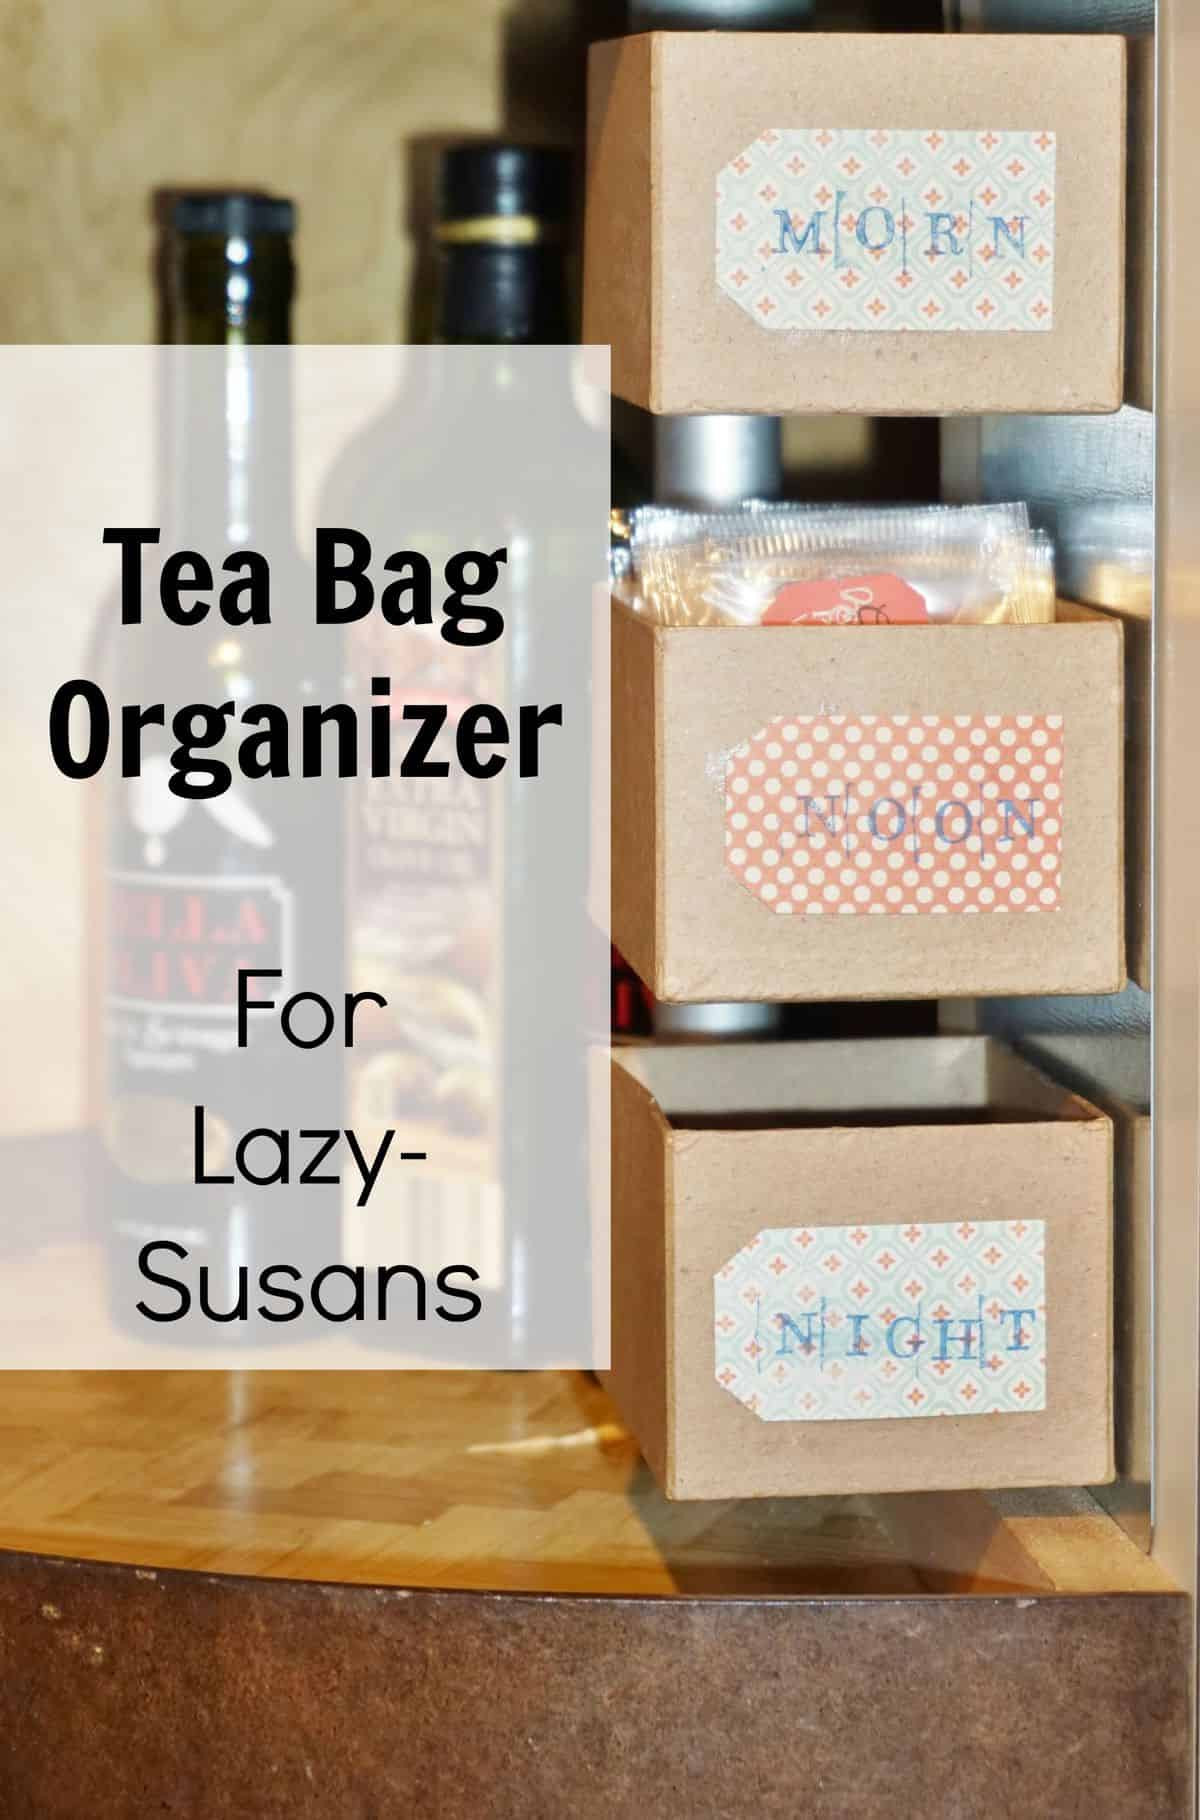 Tea Bag Organizer DIY
 A Cozy Place for Tea Organizing Tea Bags in a Lazy Susan